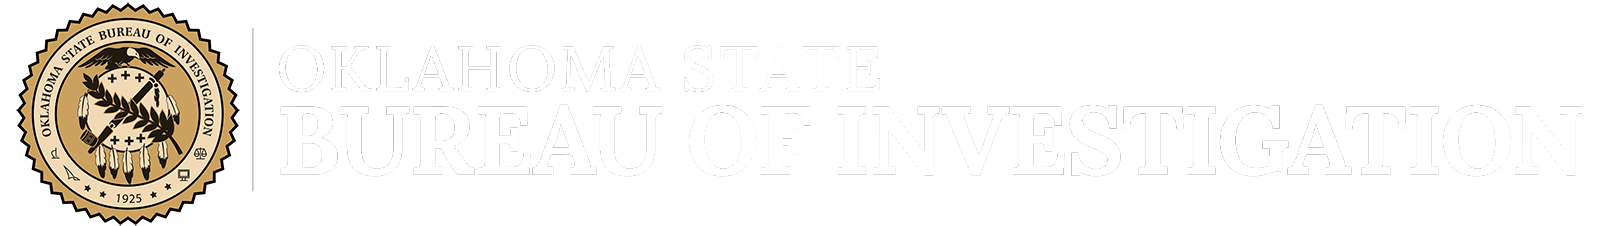 Oklahoma State Bureau of Investigation logo